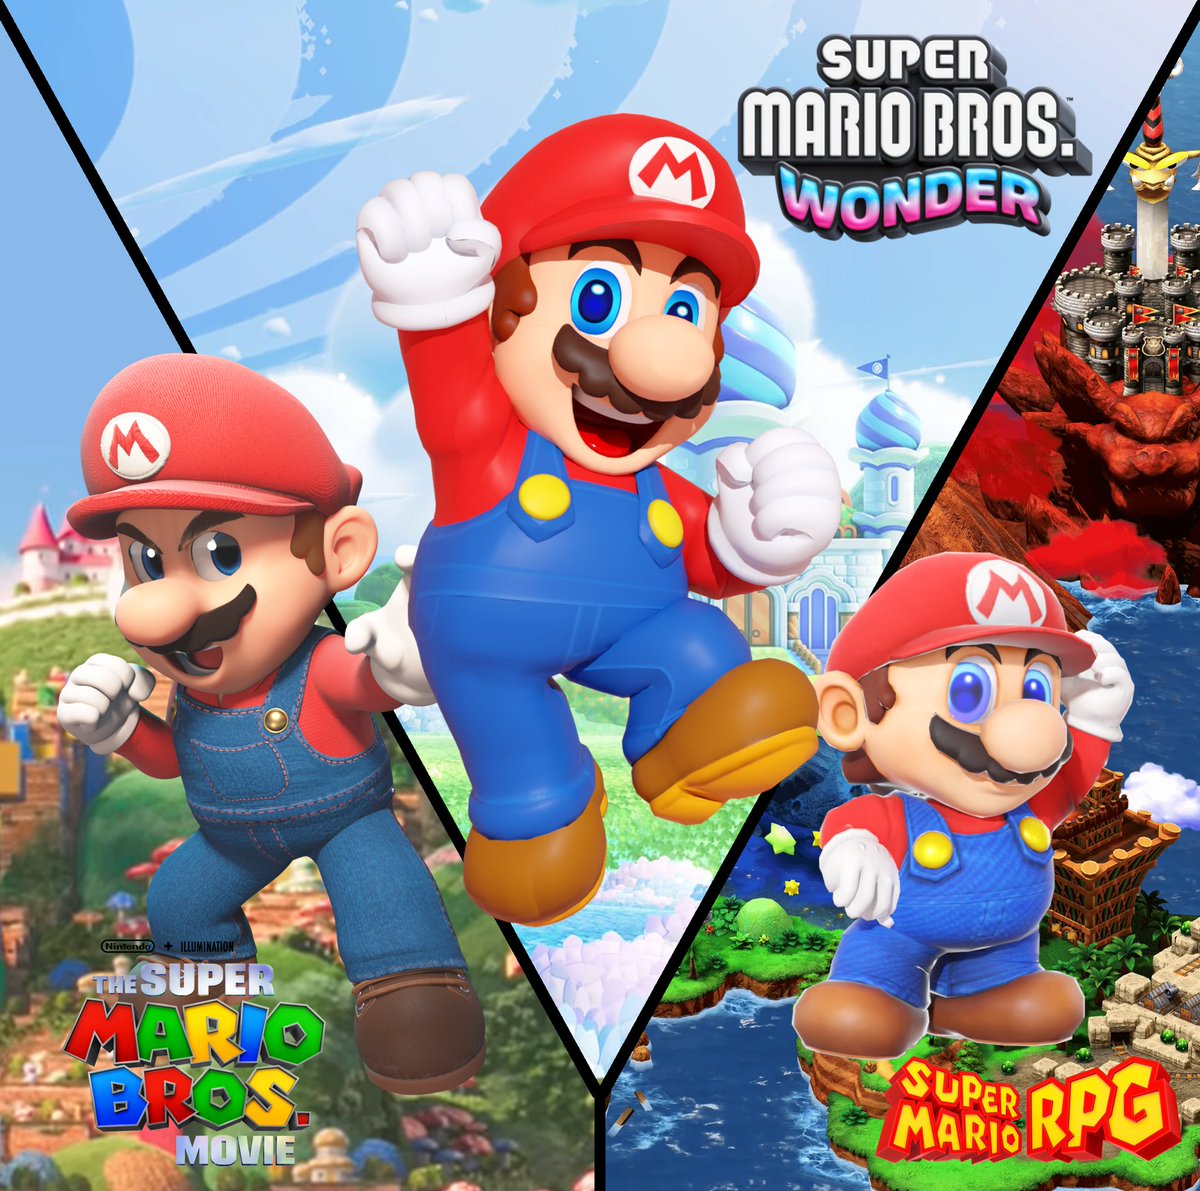 I like this new era of Mario

#SuperMarioBrosWonder #SuperMarioRPG #MarioMovie